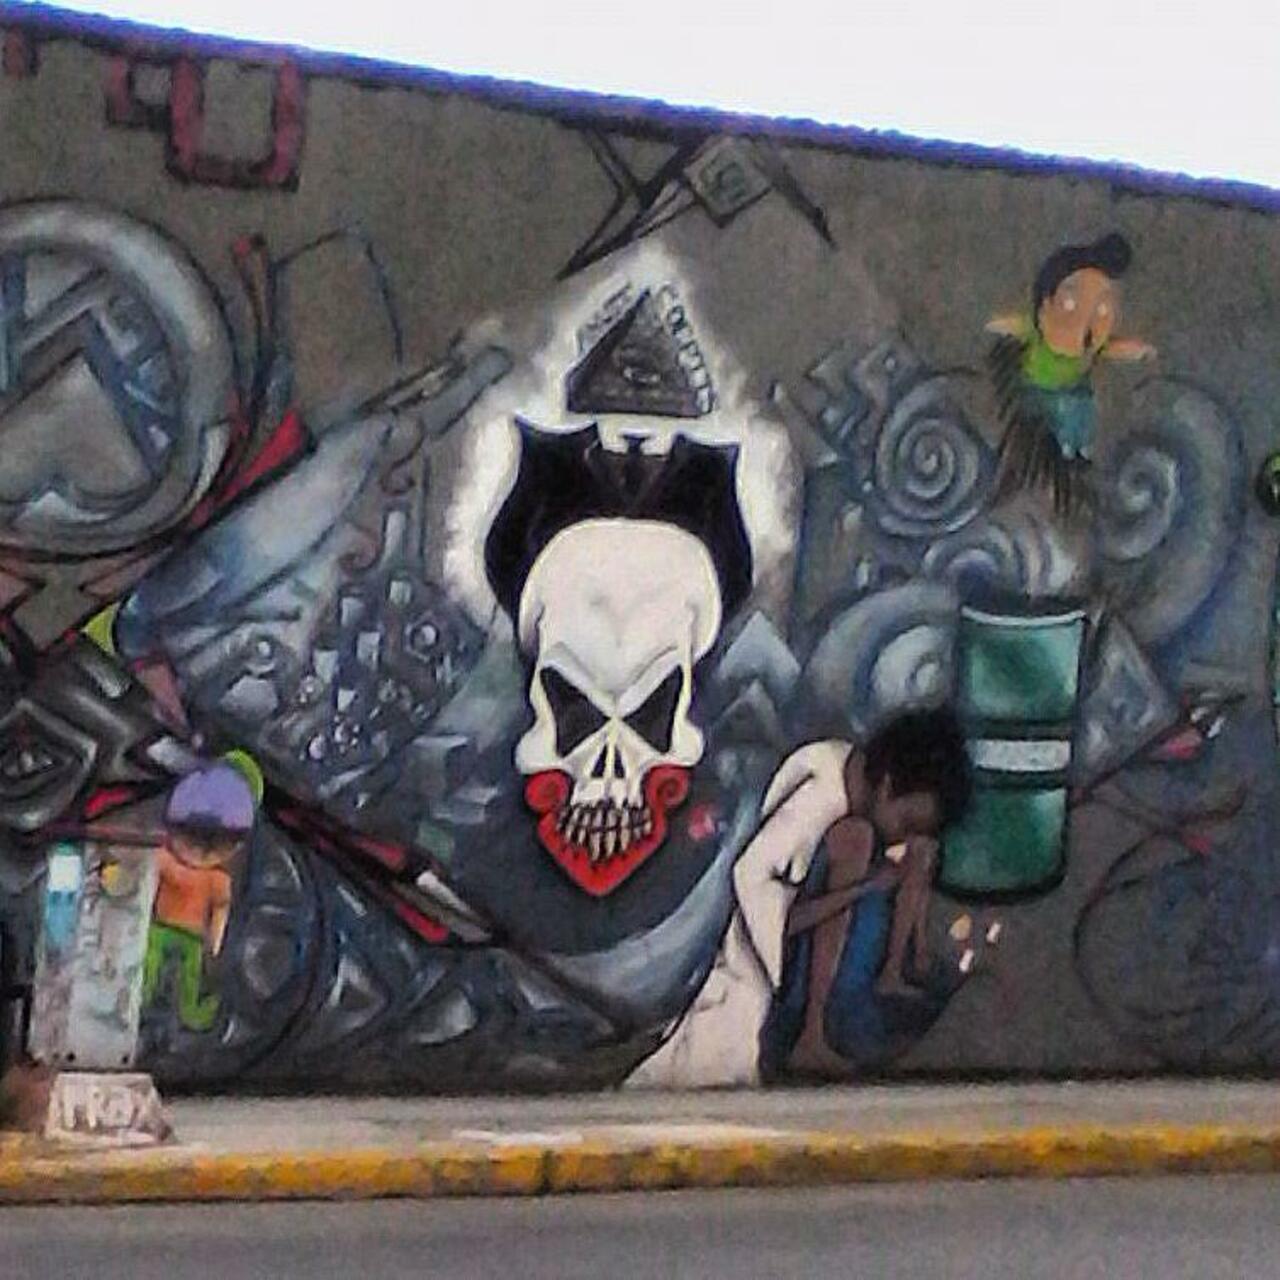 RT @StArtEverywhere: #Mexico #MexicoCity #StreetArt #Graffiti #StreetArtMexico #Urban #Art #Mural #Architecture #Wall #Bones #Skull #Hea… http://t.co/ENdPiONhlb